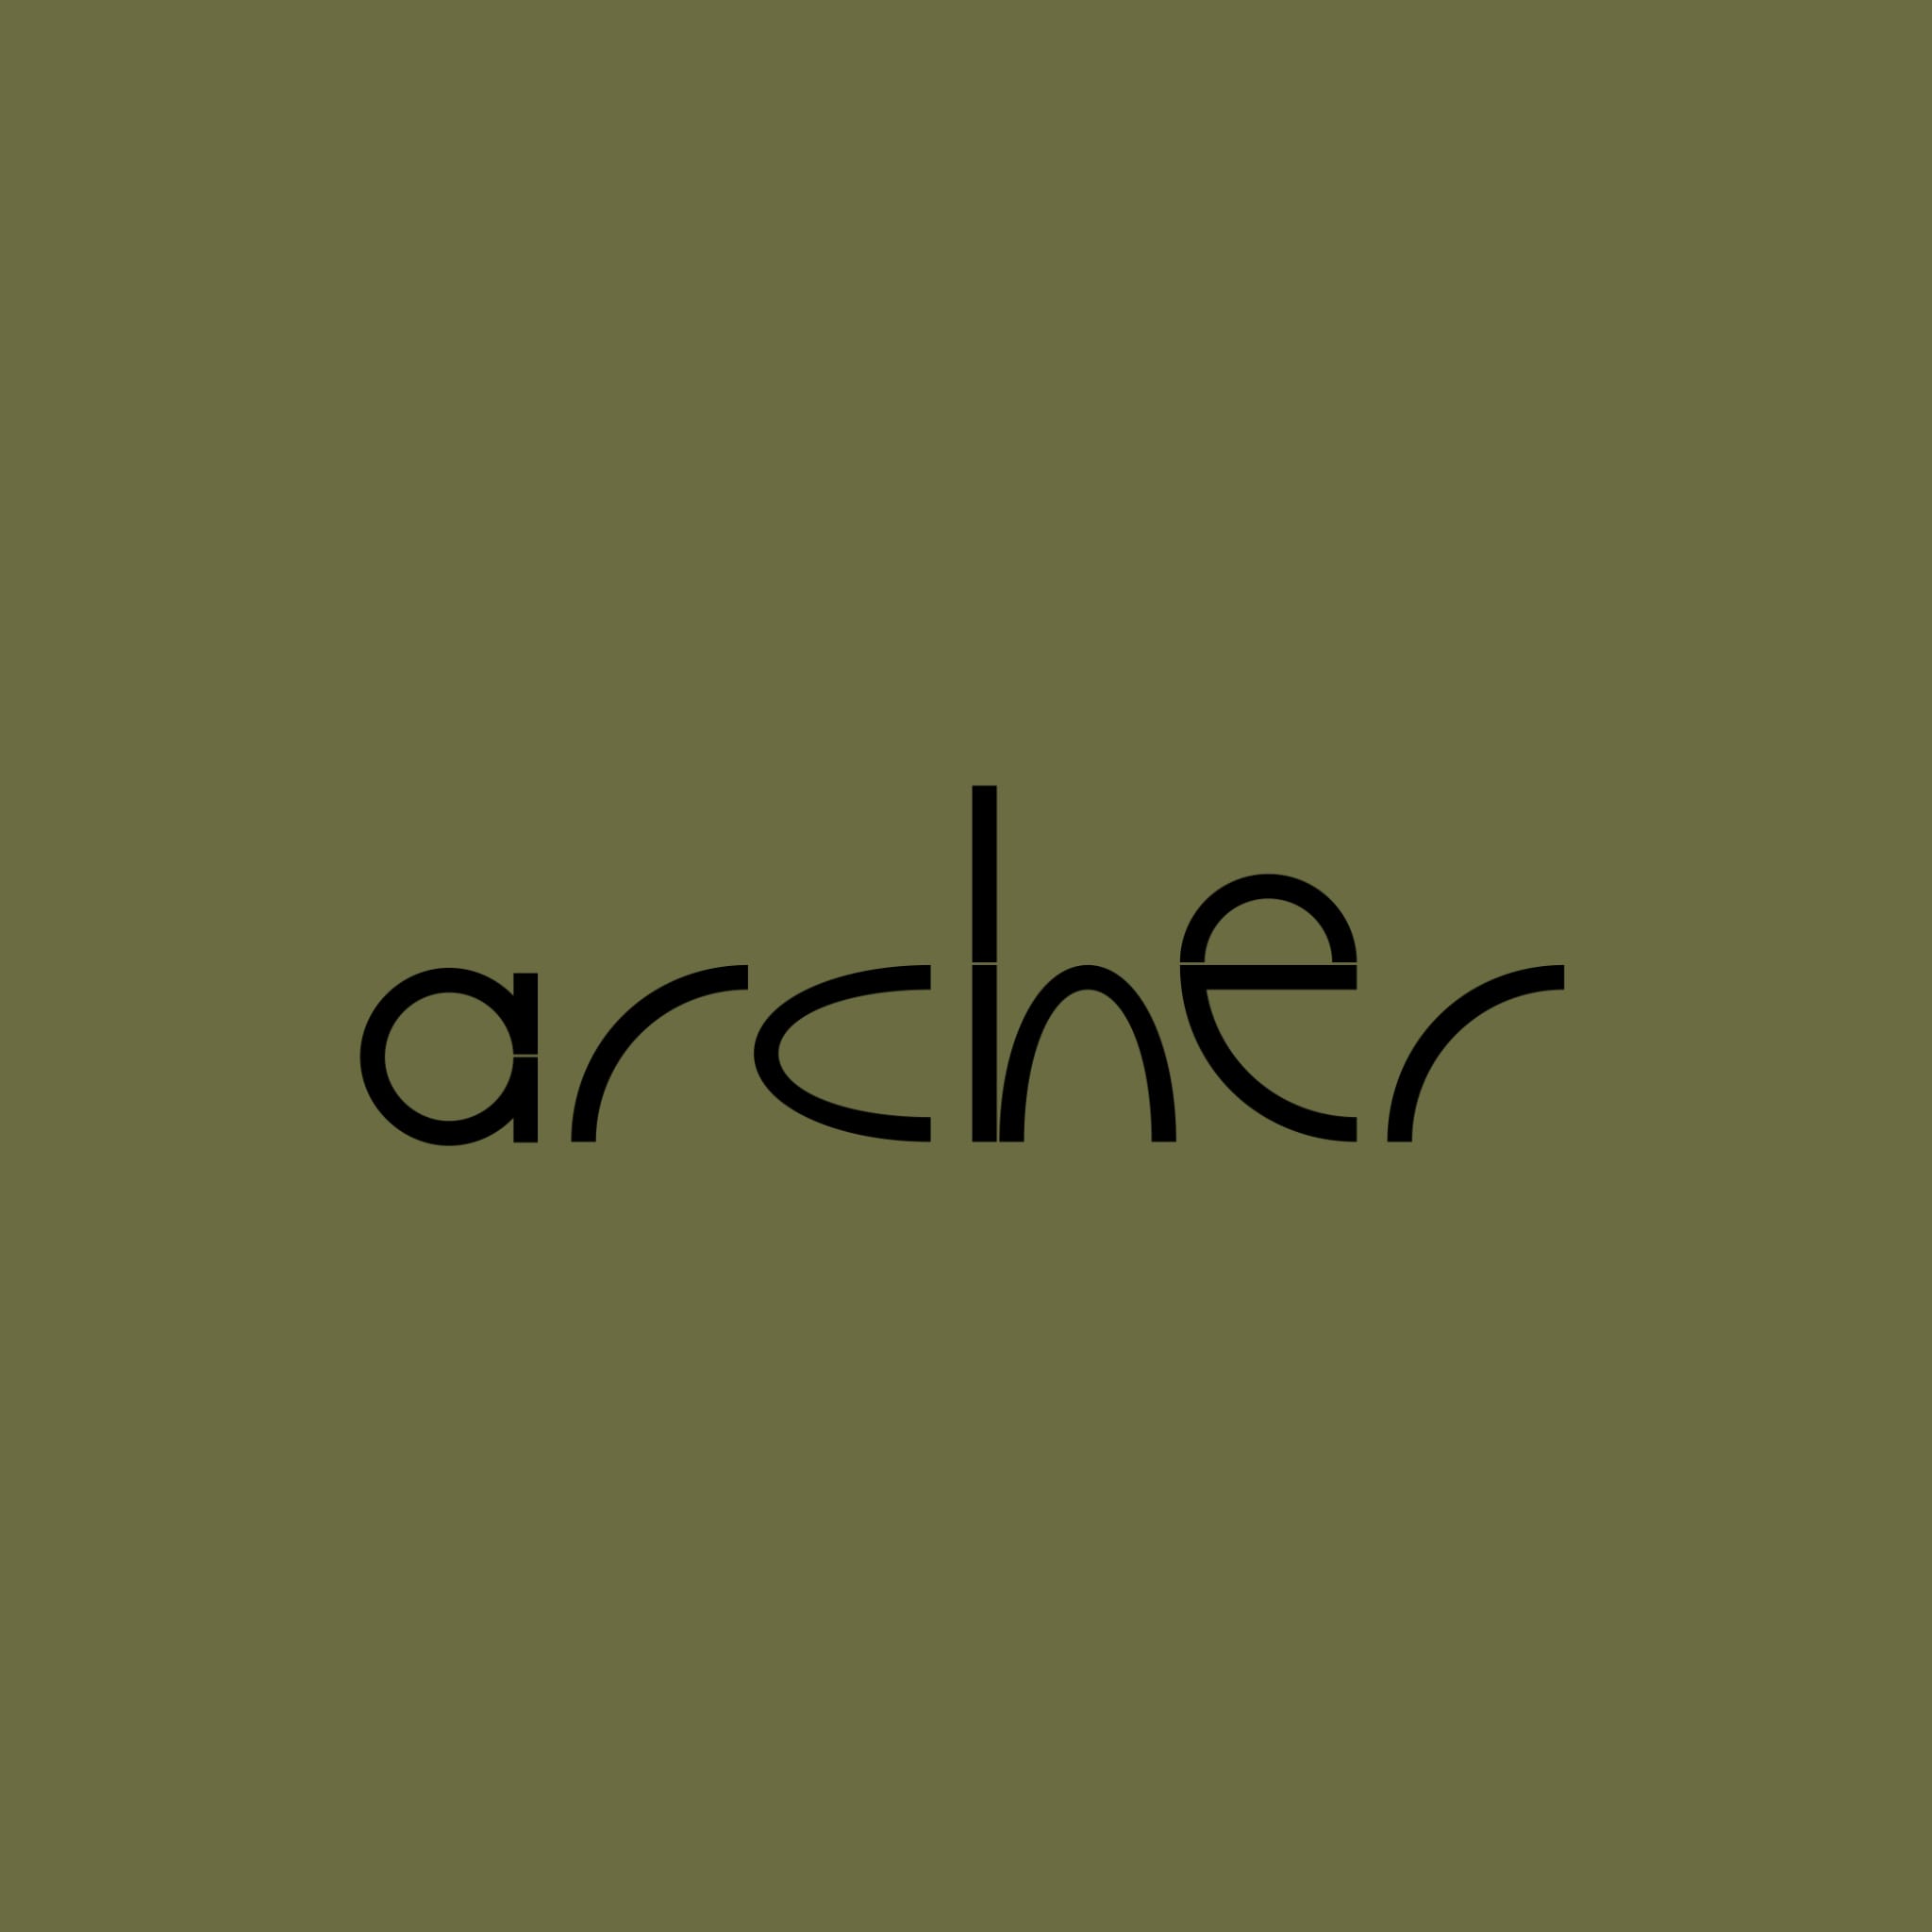 Archer Dining Ltd